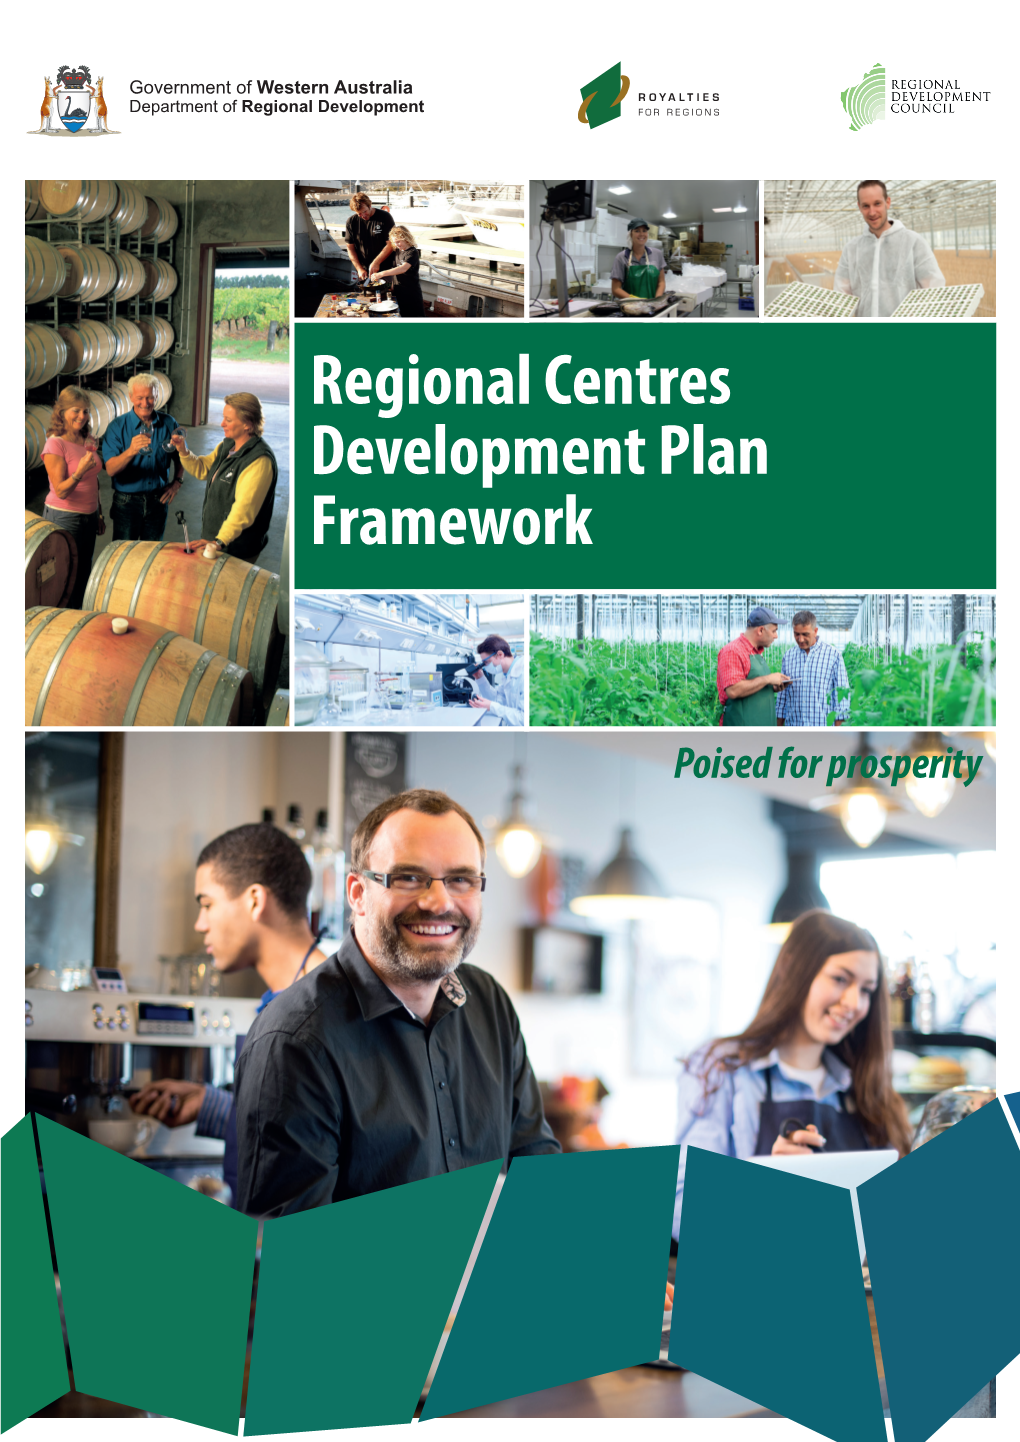 Regional Centres Development Plan Framework